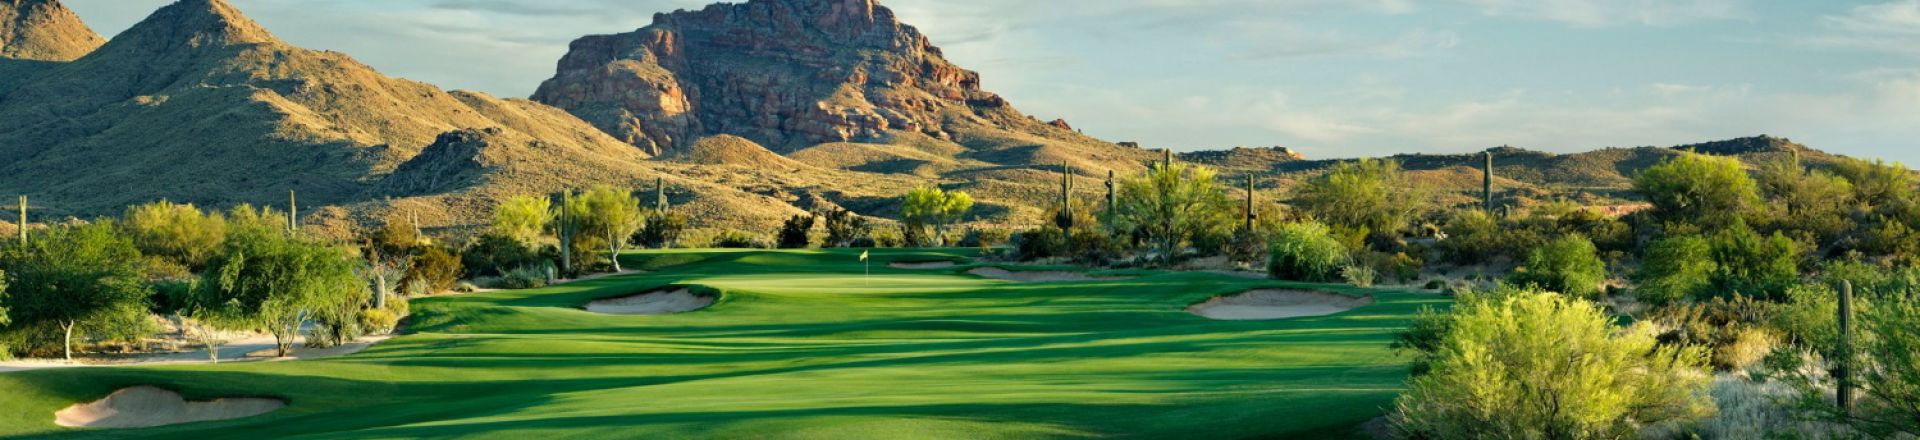 We-Ko-Pa Golf Club in Arizona, California